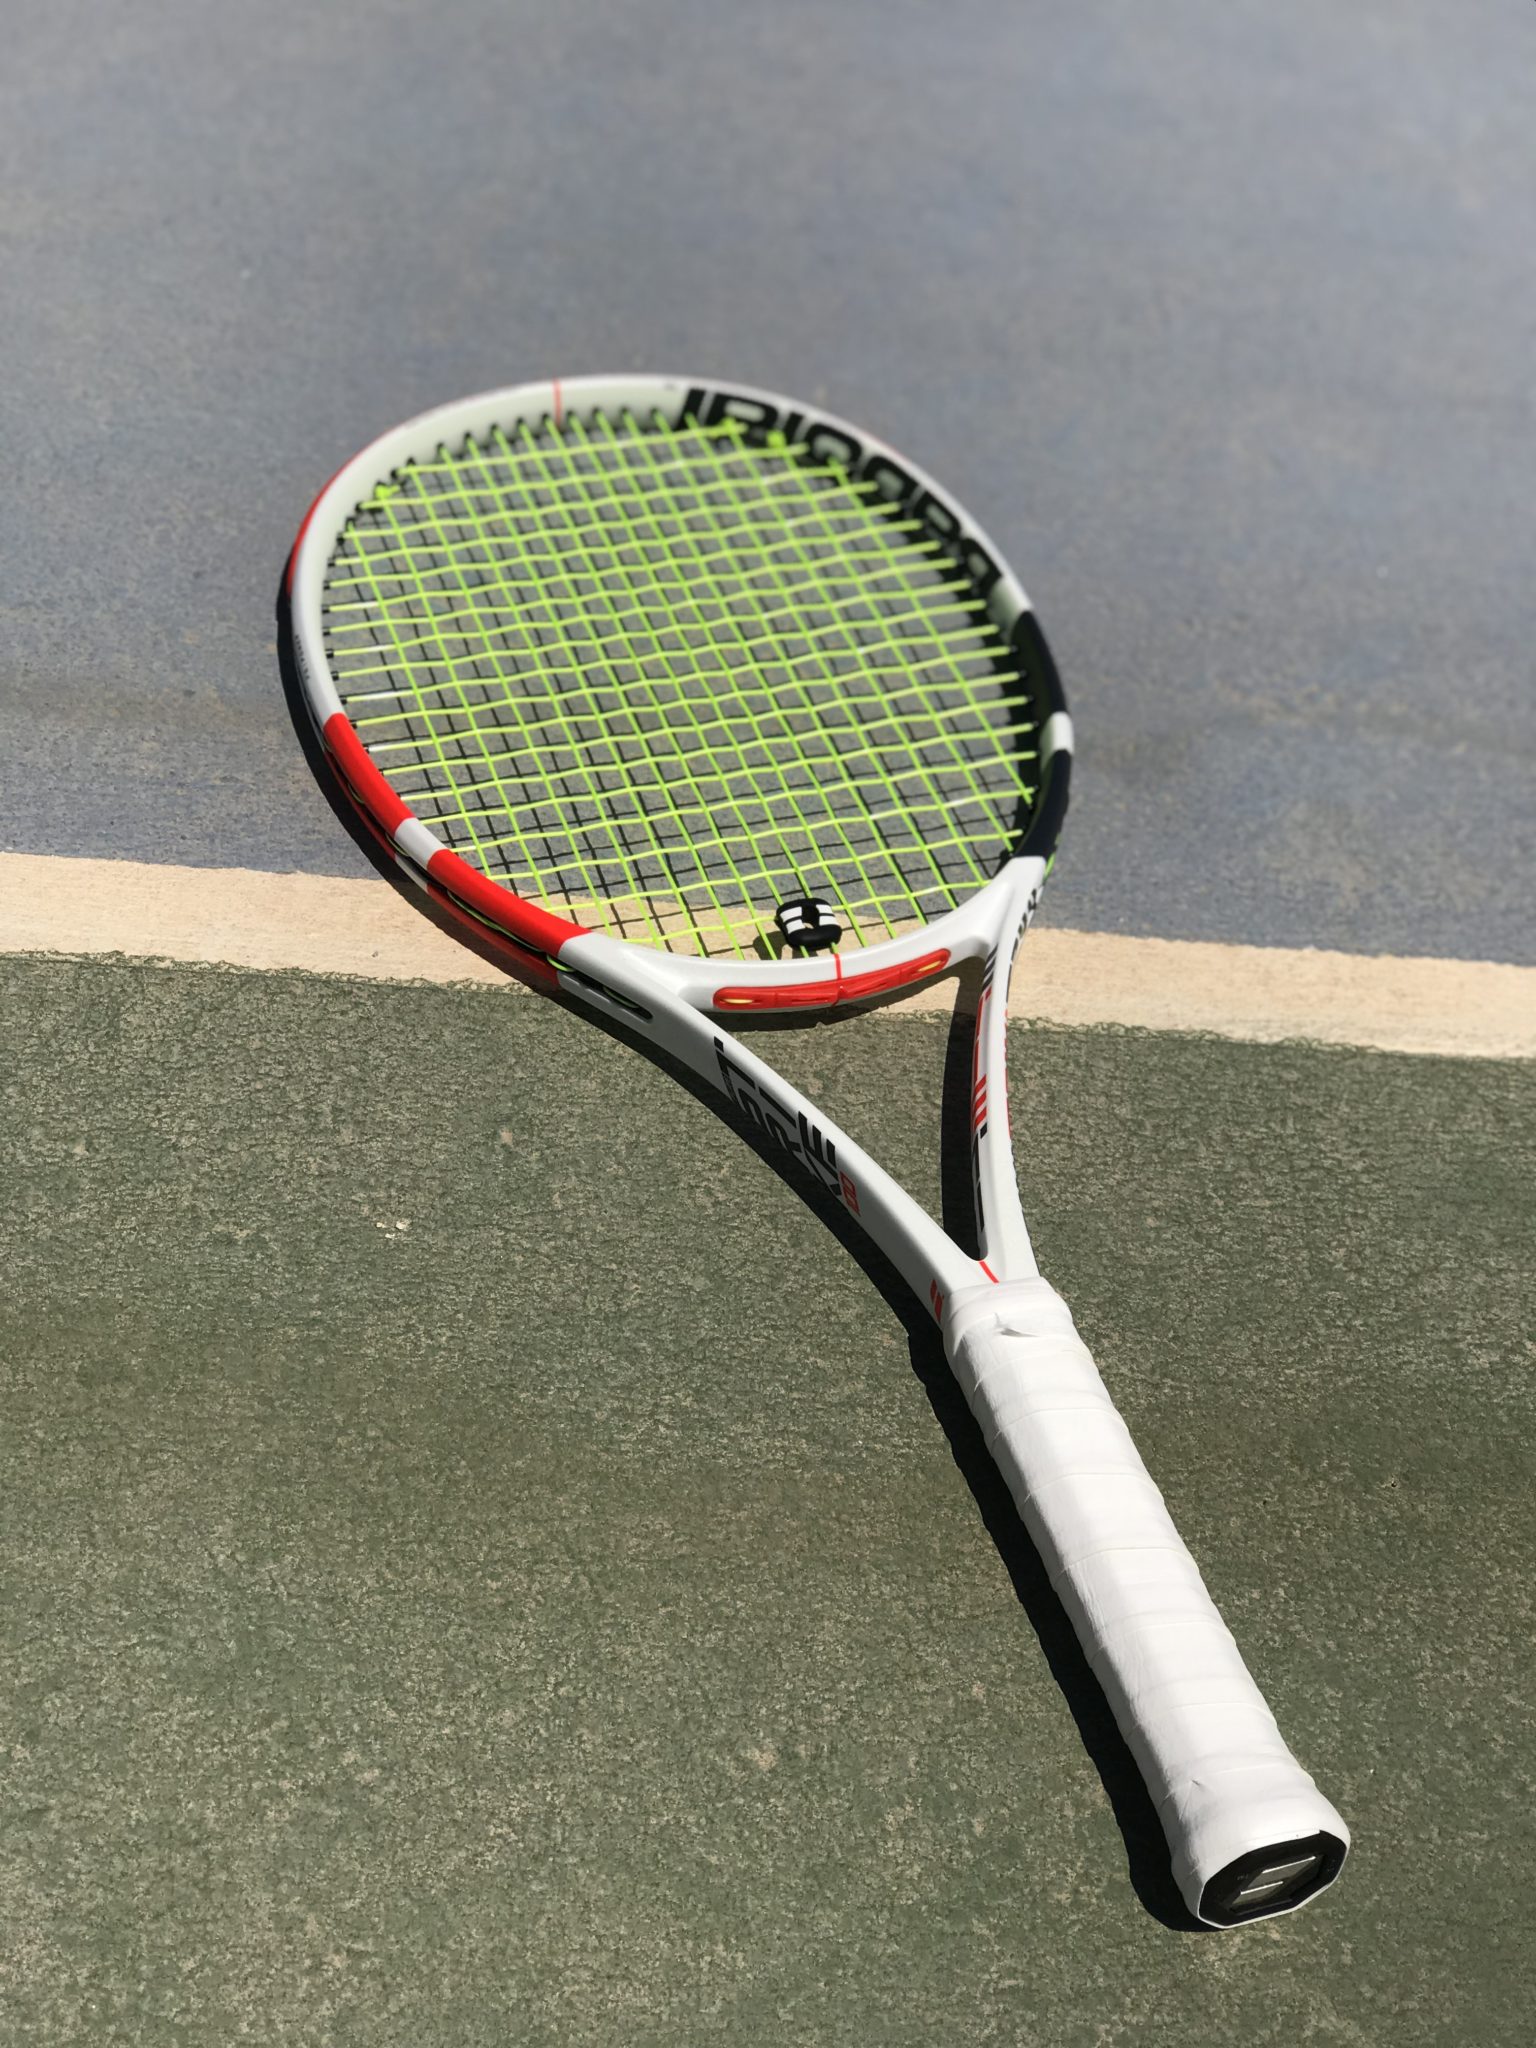 Gear of the Year 2019: Racquets - Tennisnerd.net - Top 10 Racquets